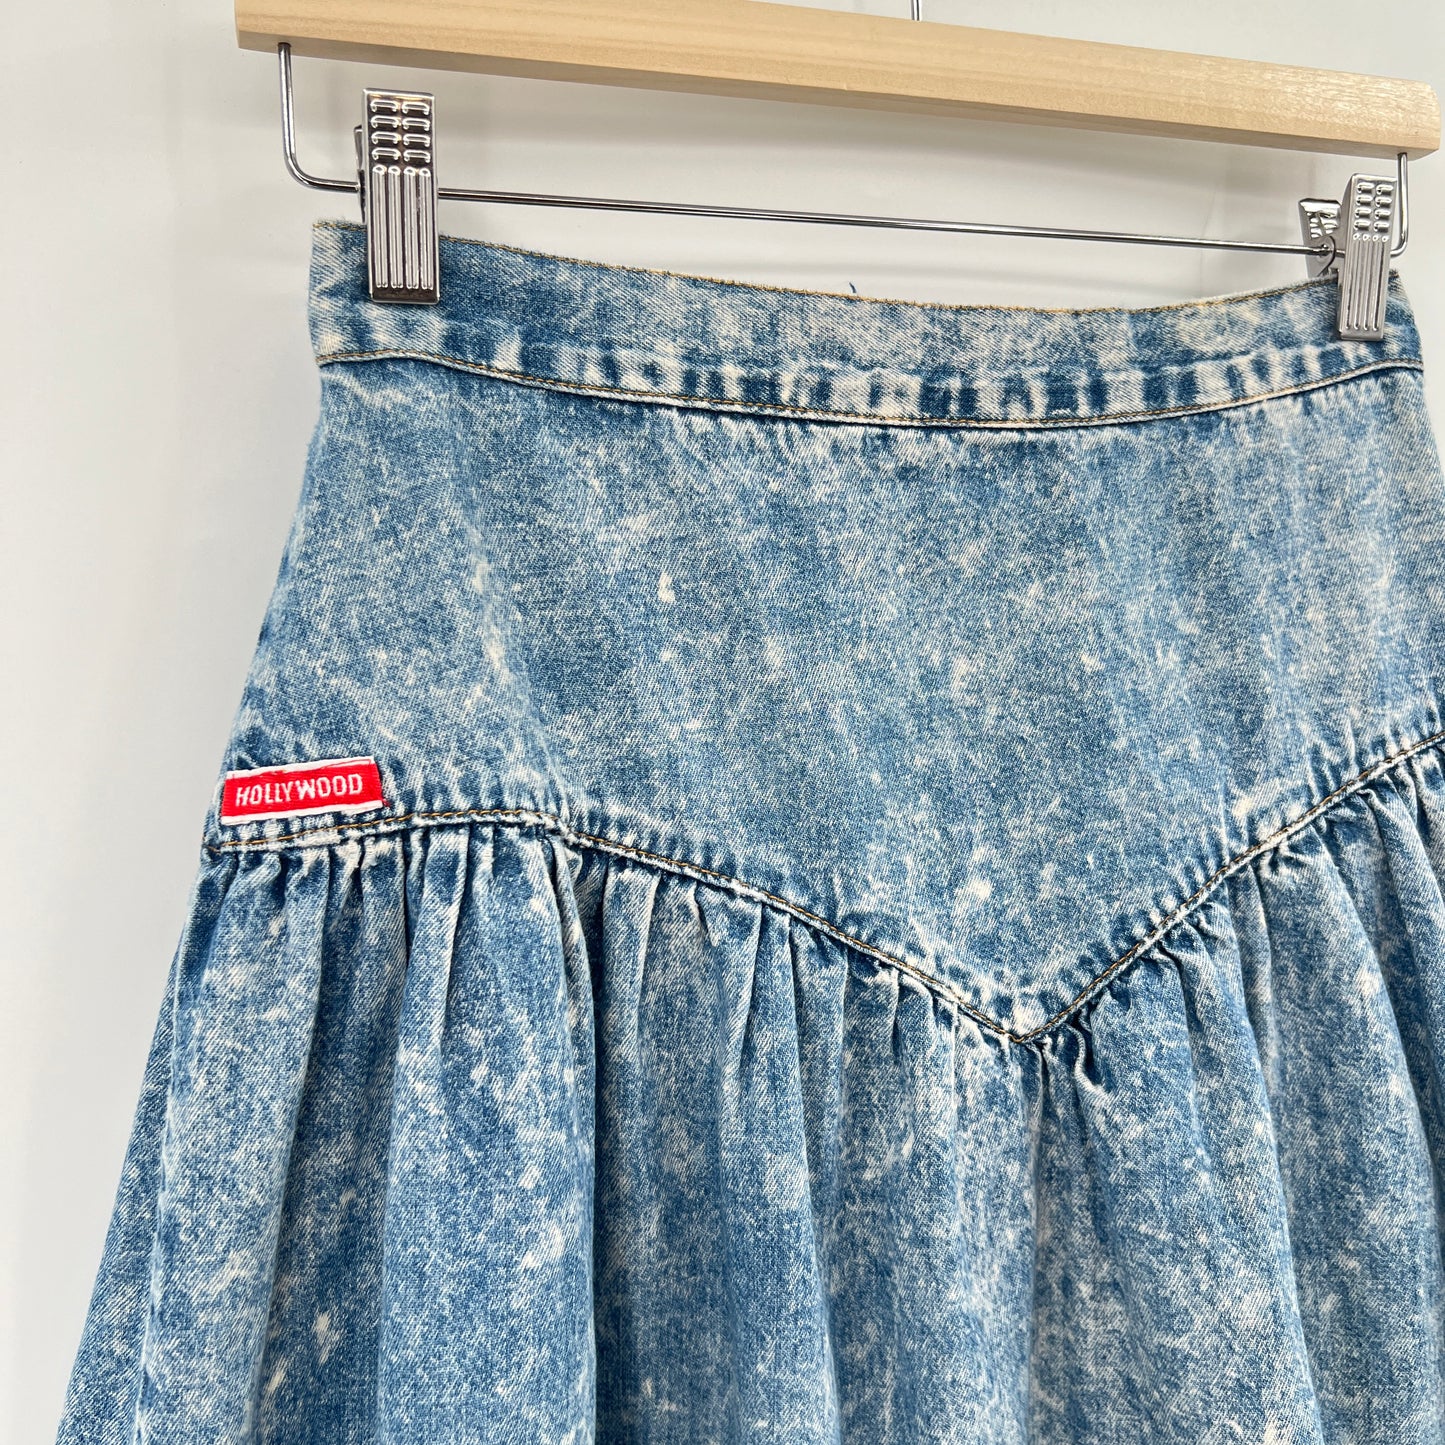 Vintage Hollywood Acid Wash Skirt XS/S